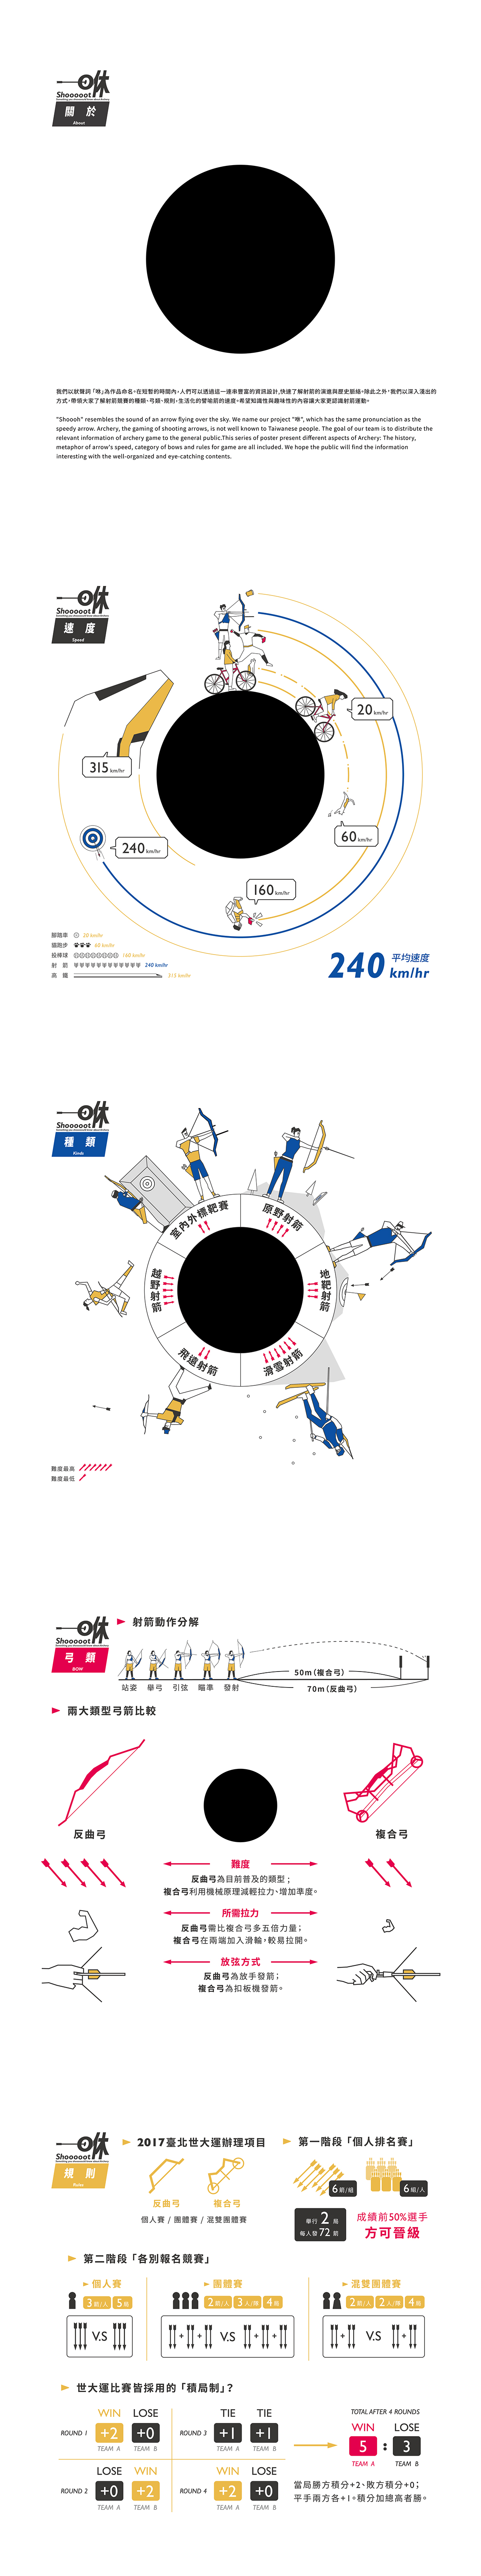 infographic olympic Archery sport graphic adobeawards #semis